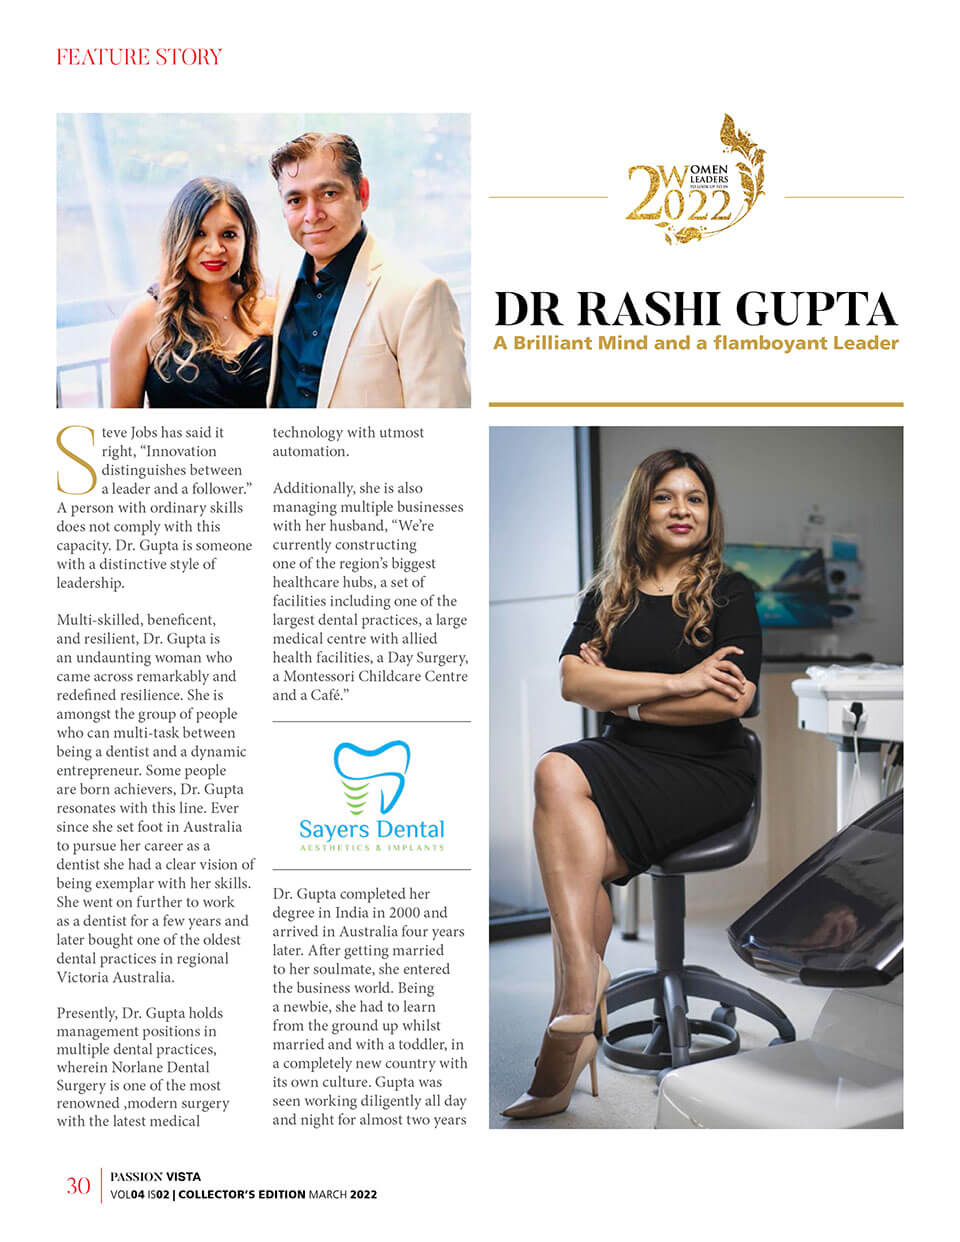 dr rashi gupta passion vista magazine story 2